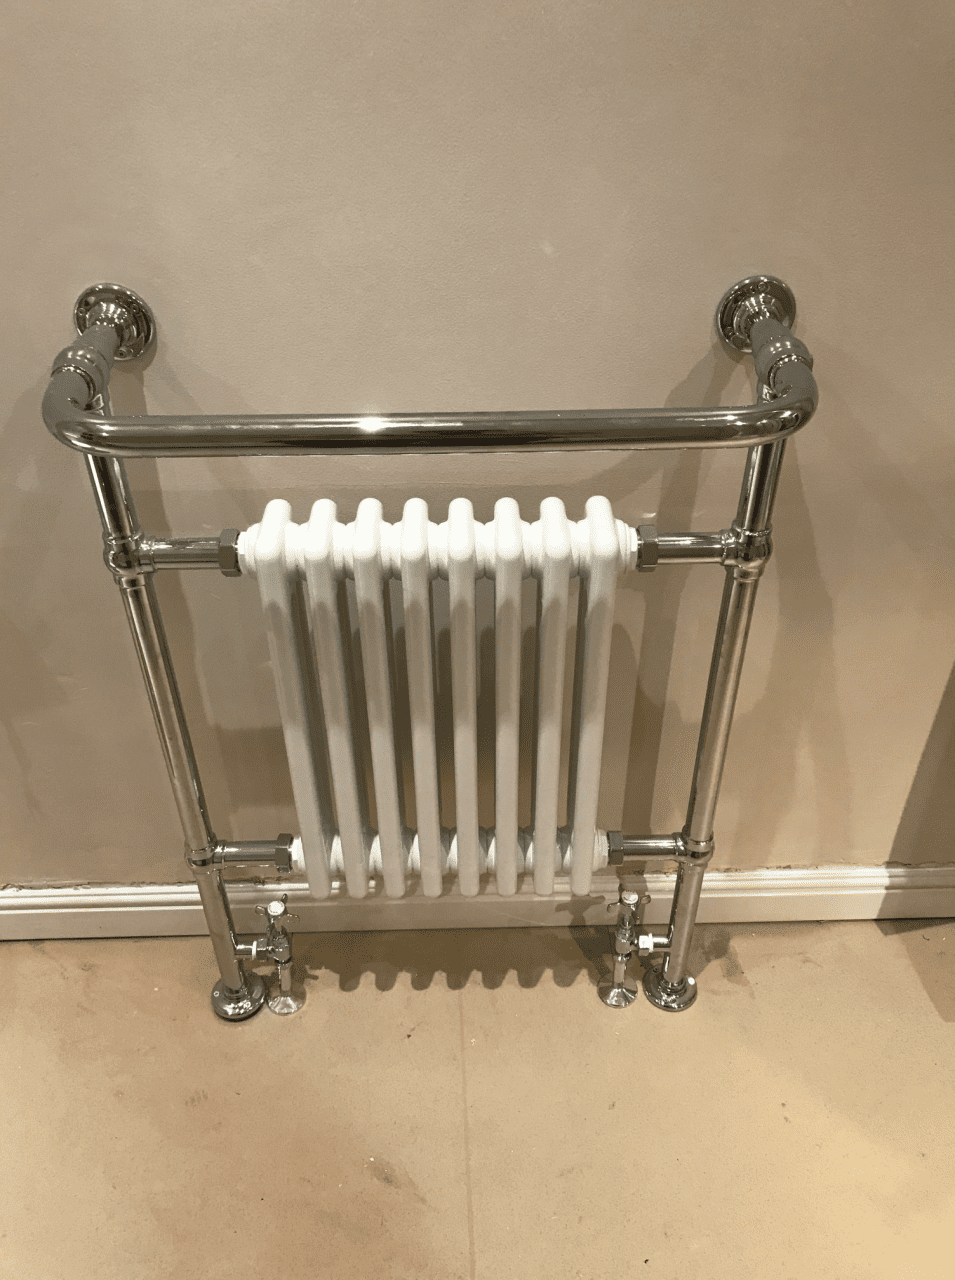 High quality chrome radiator installed as part of bathroom refit